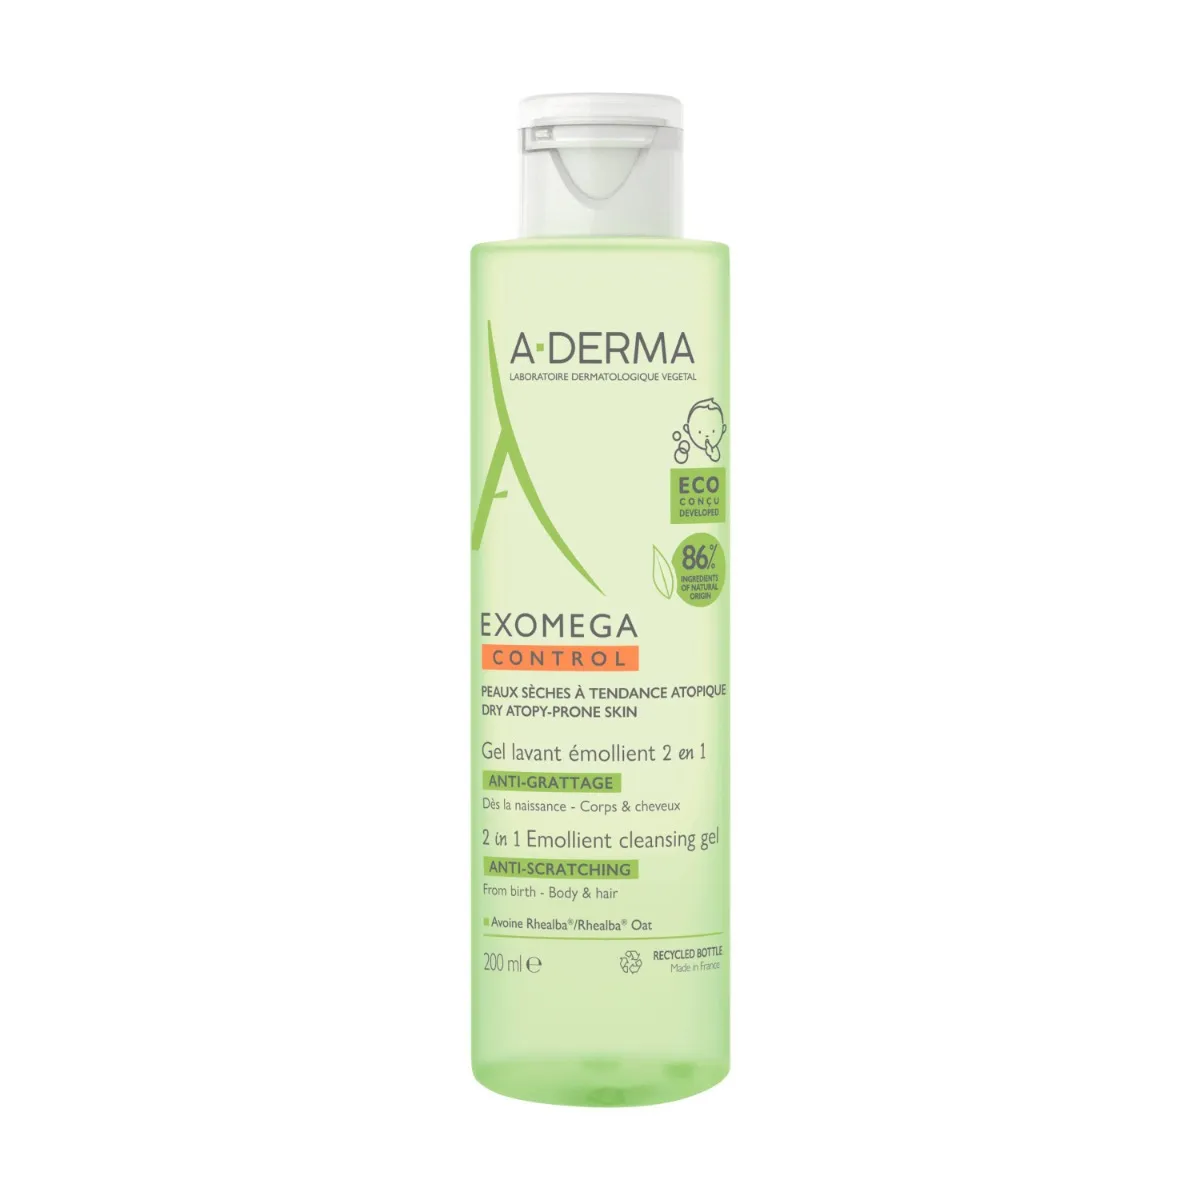 a-derma-exomega-control-gel-lavant-emollient-200-ml-3282770111293